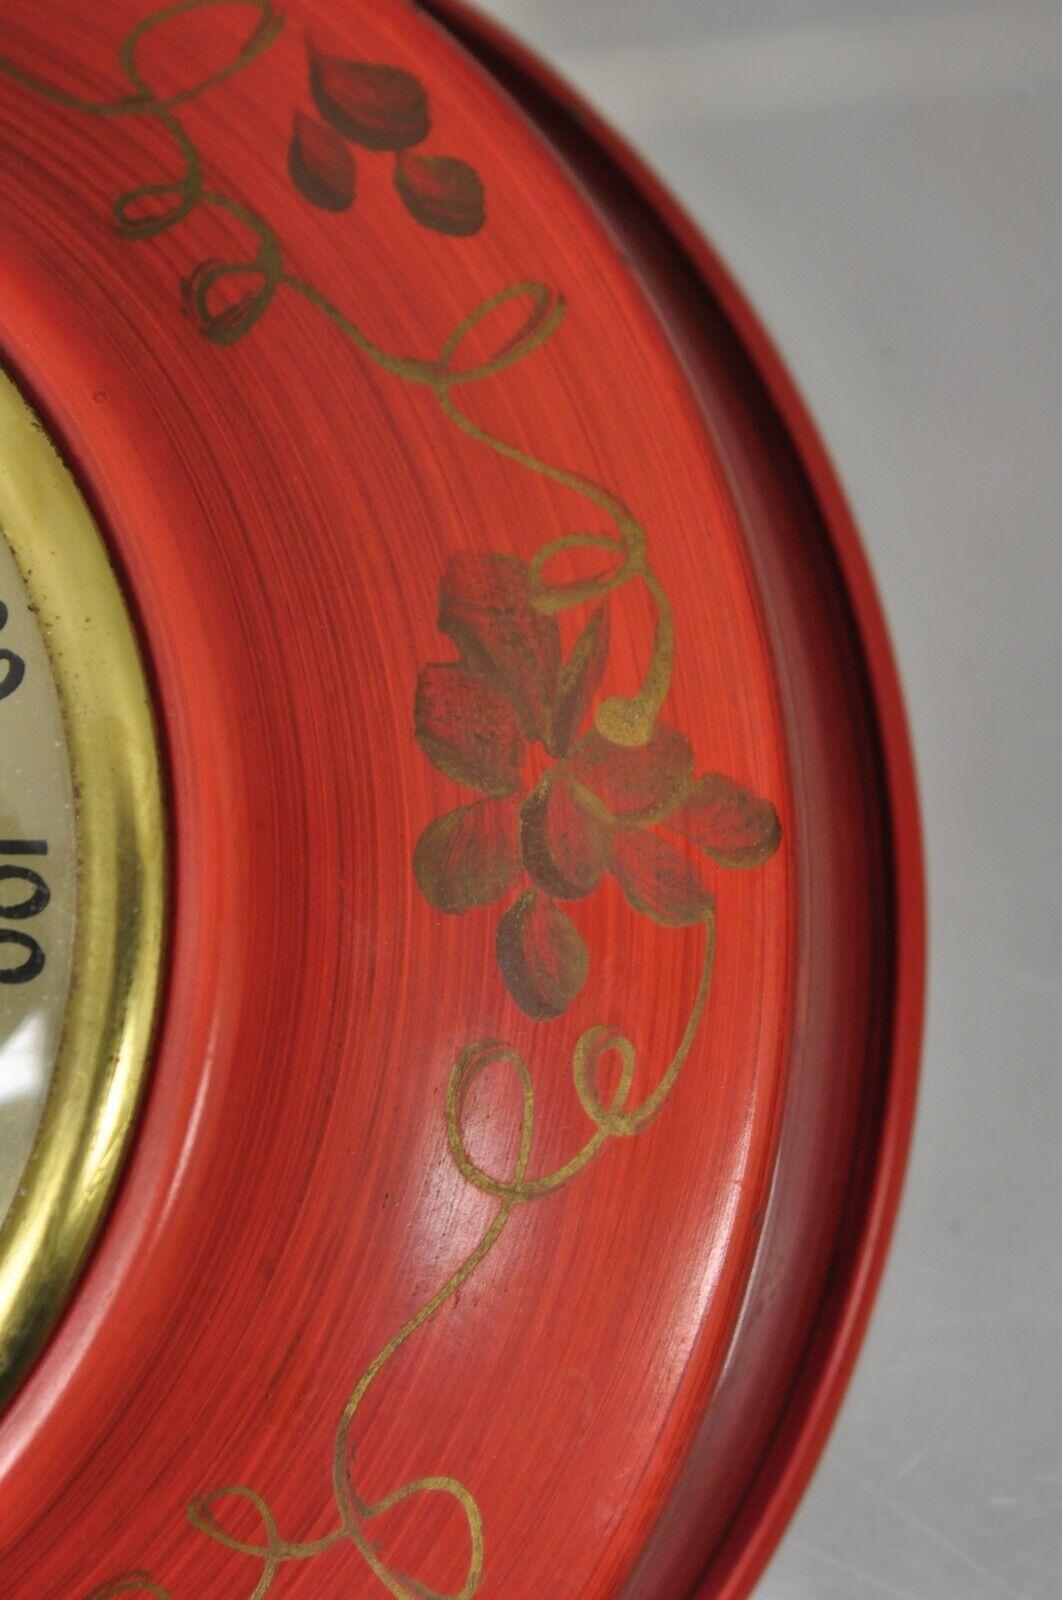 20th Century Vintage Verichron Red Tole Metal Barometer Hygrometer Thermometer, 3 Pc Set